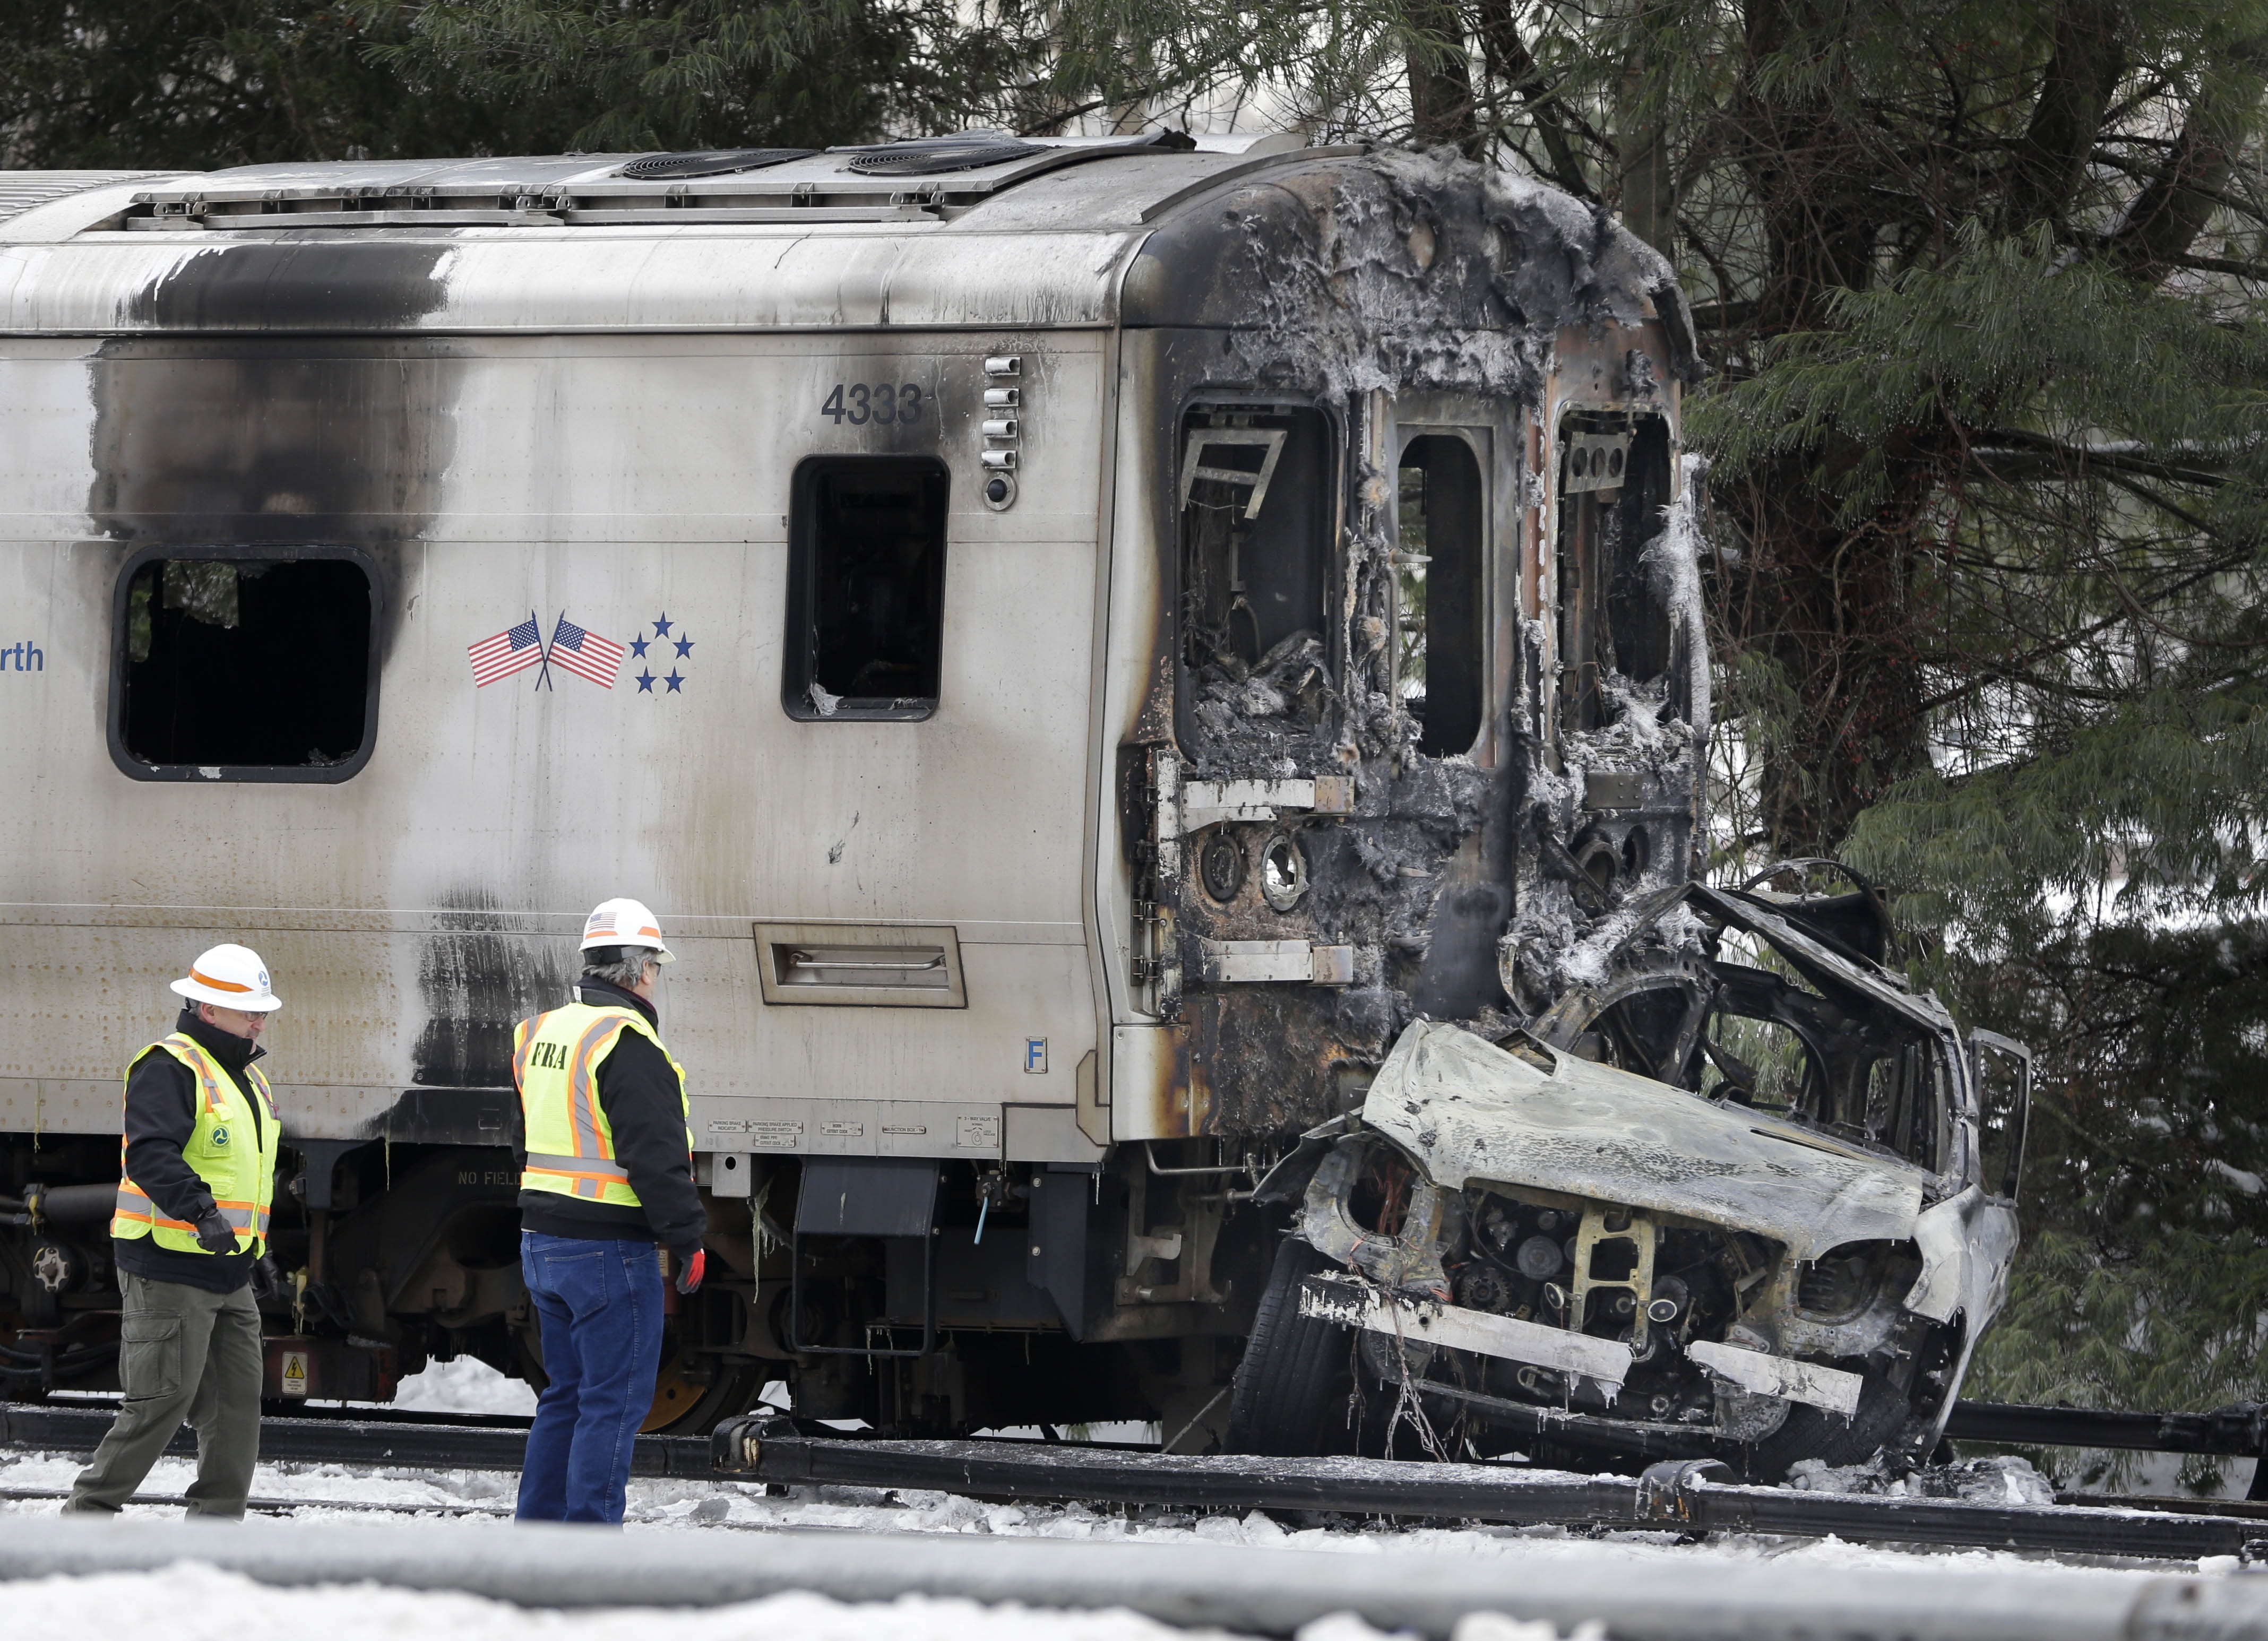 MetroNorth crash NTSB investigating fatal commuter trainSUV crash in Valhalla, New York CBS